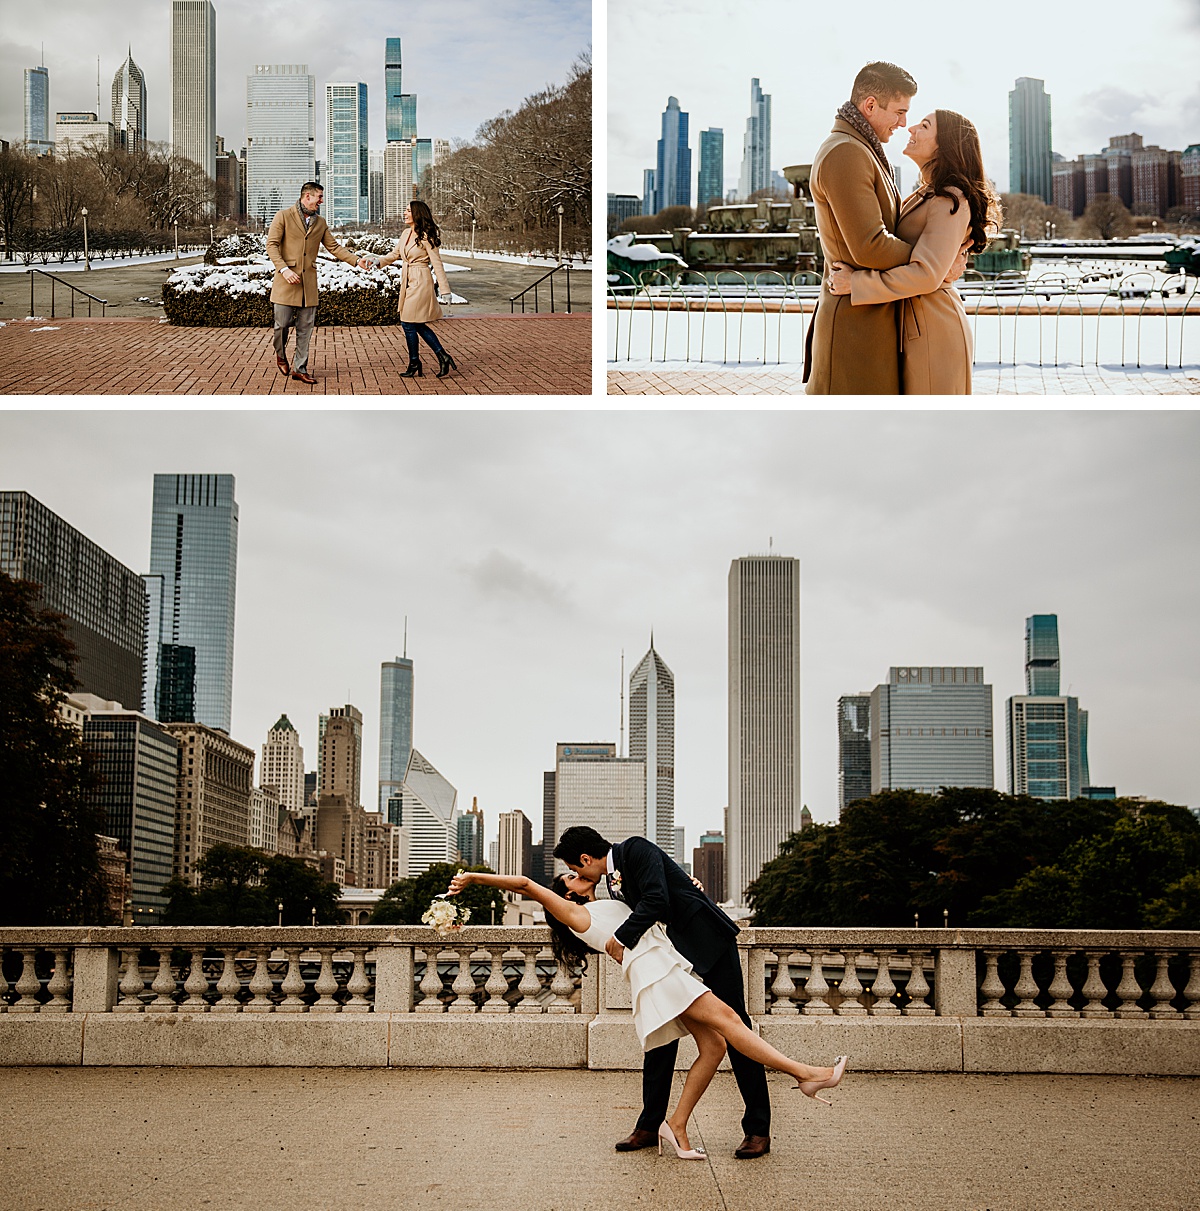 grant park, skyline, buckingham fountain, couple, chicago engagement locations, couples engagement photos,